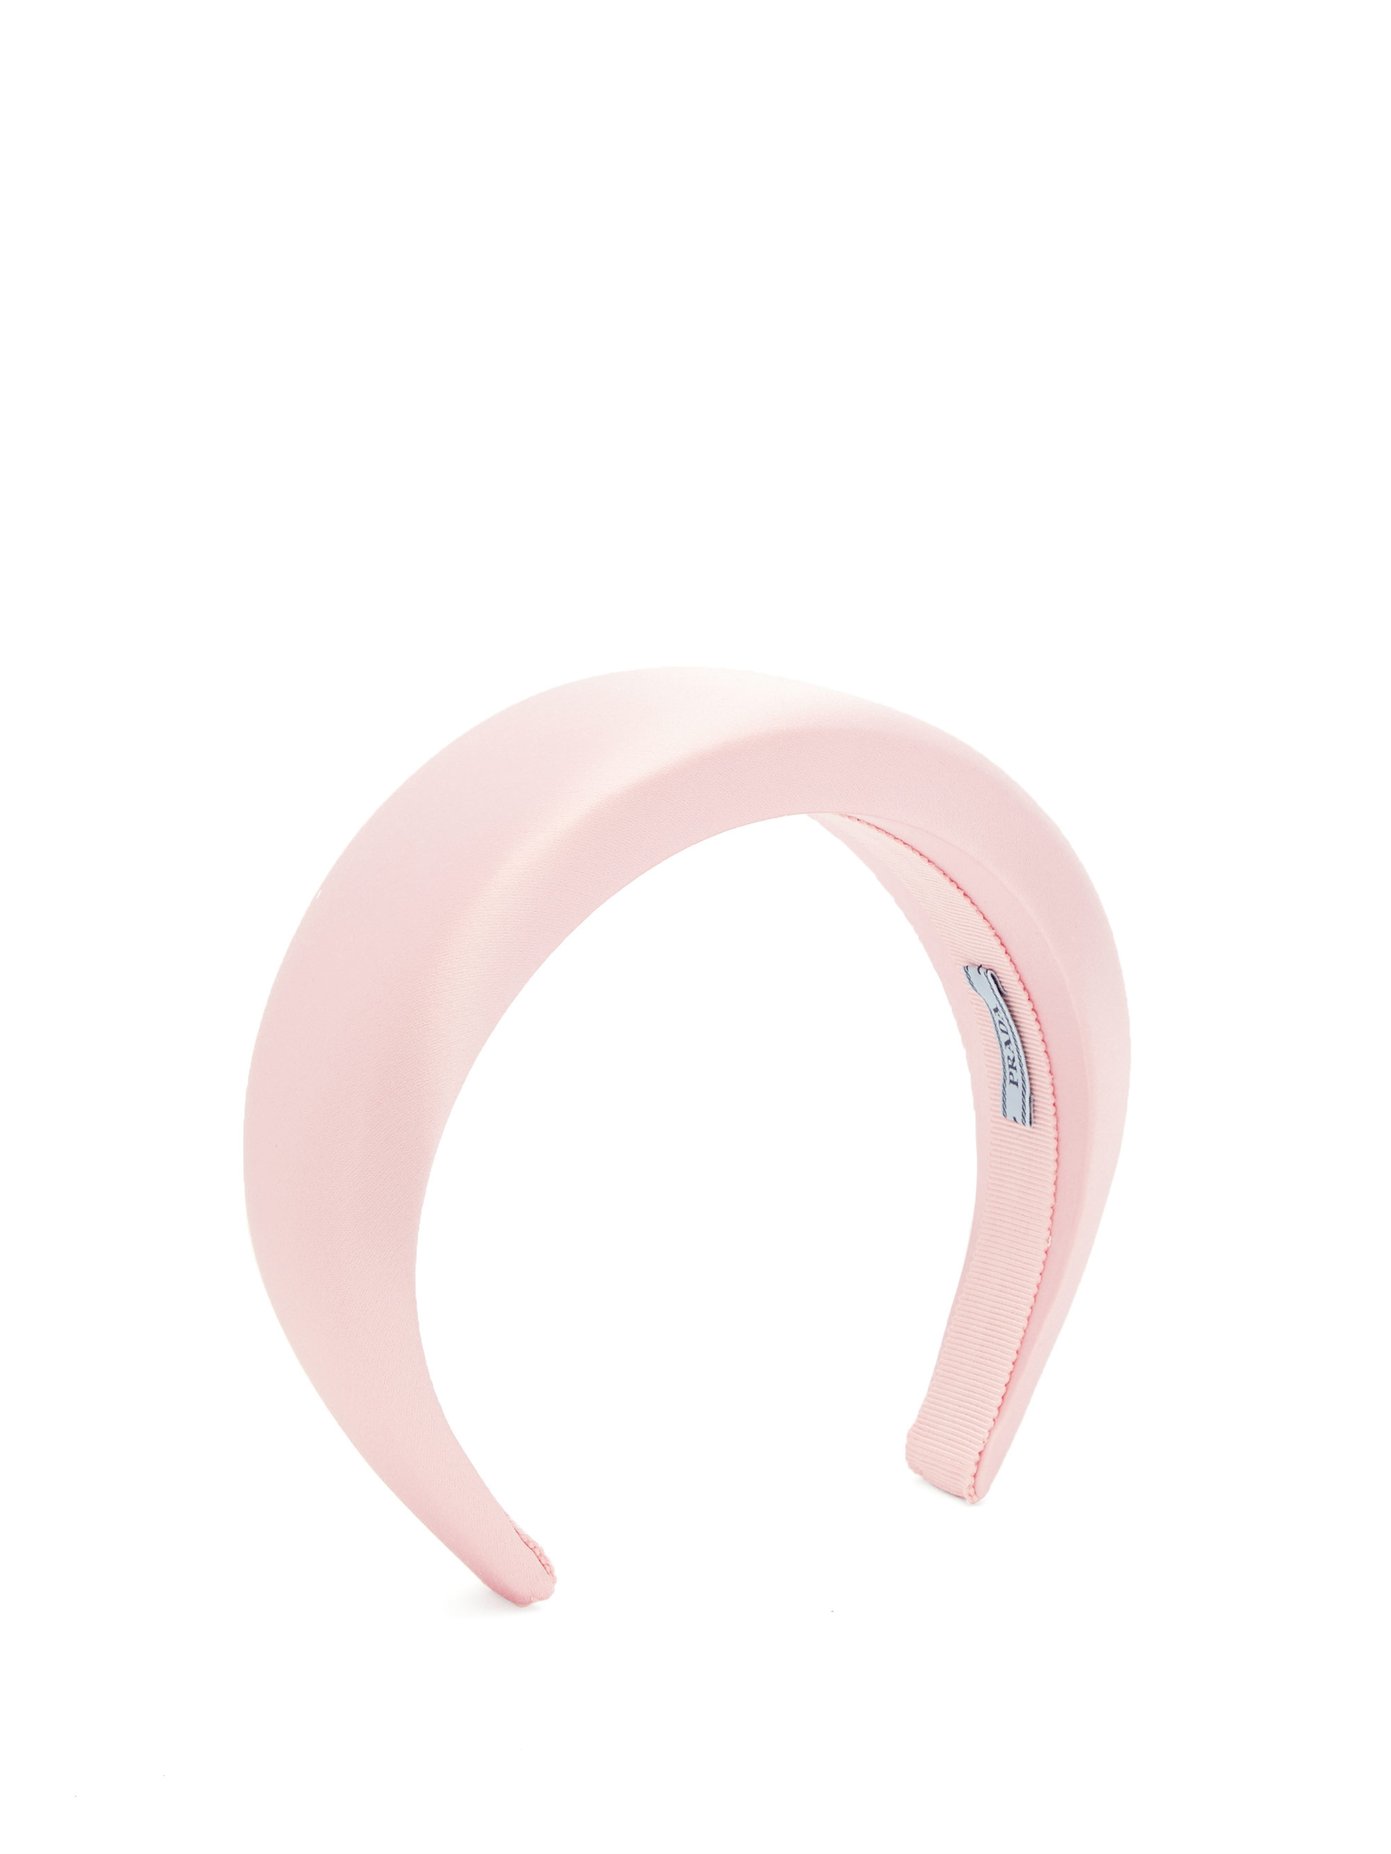 prada headband pink